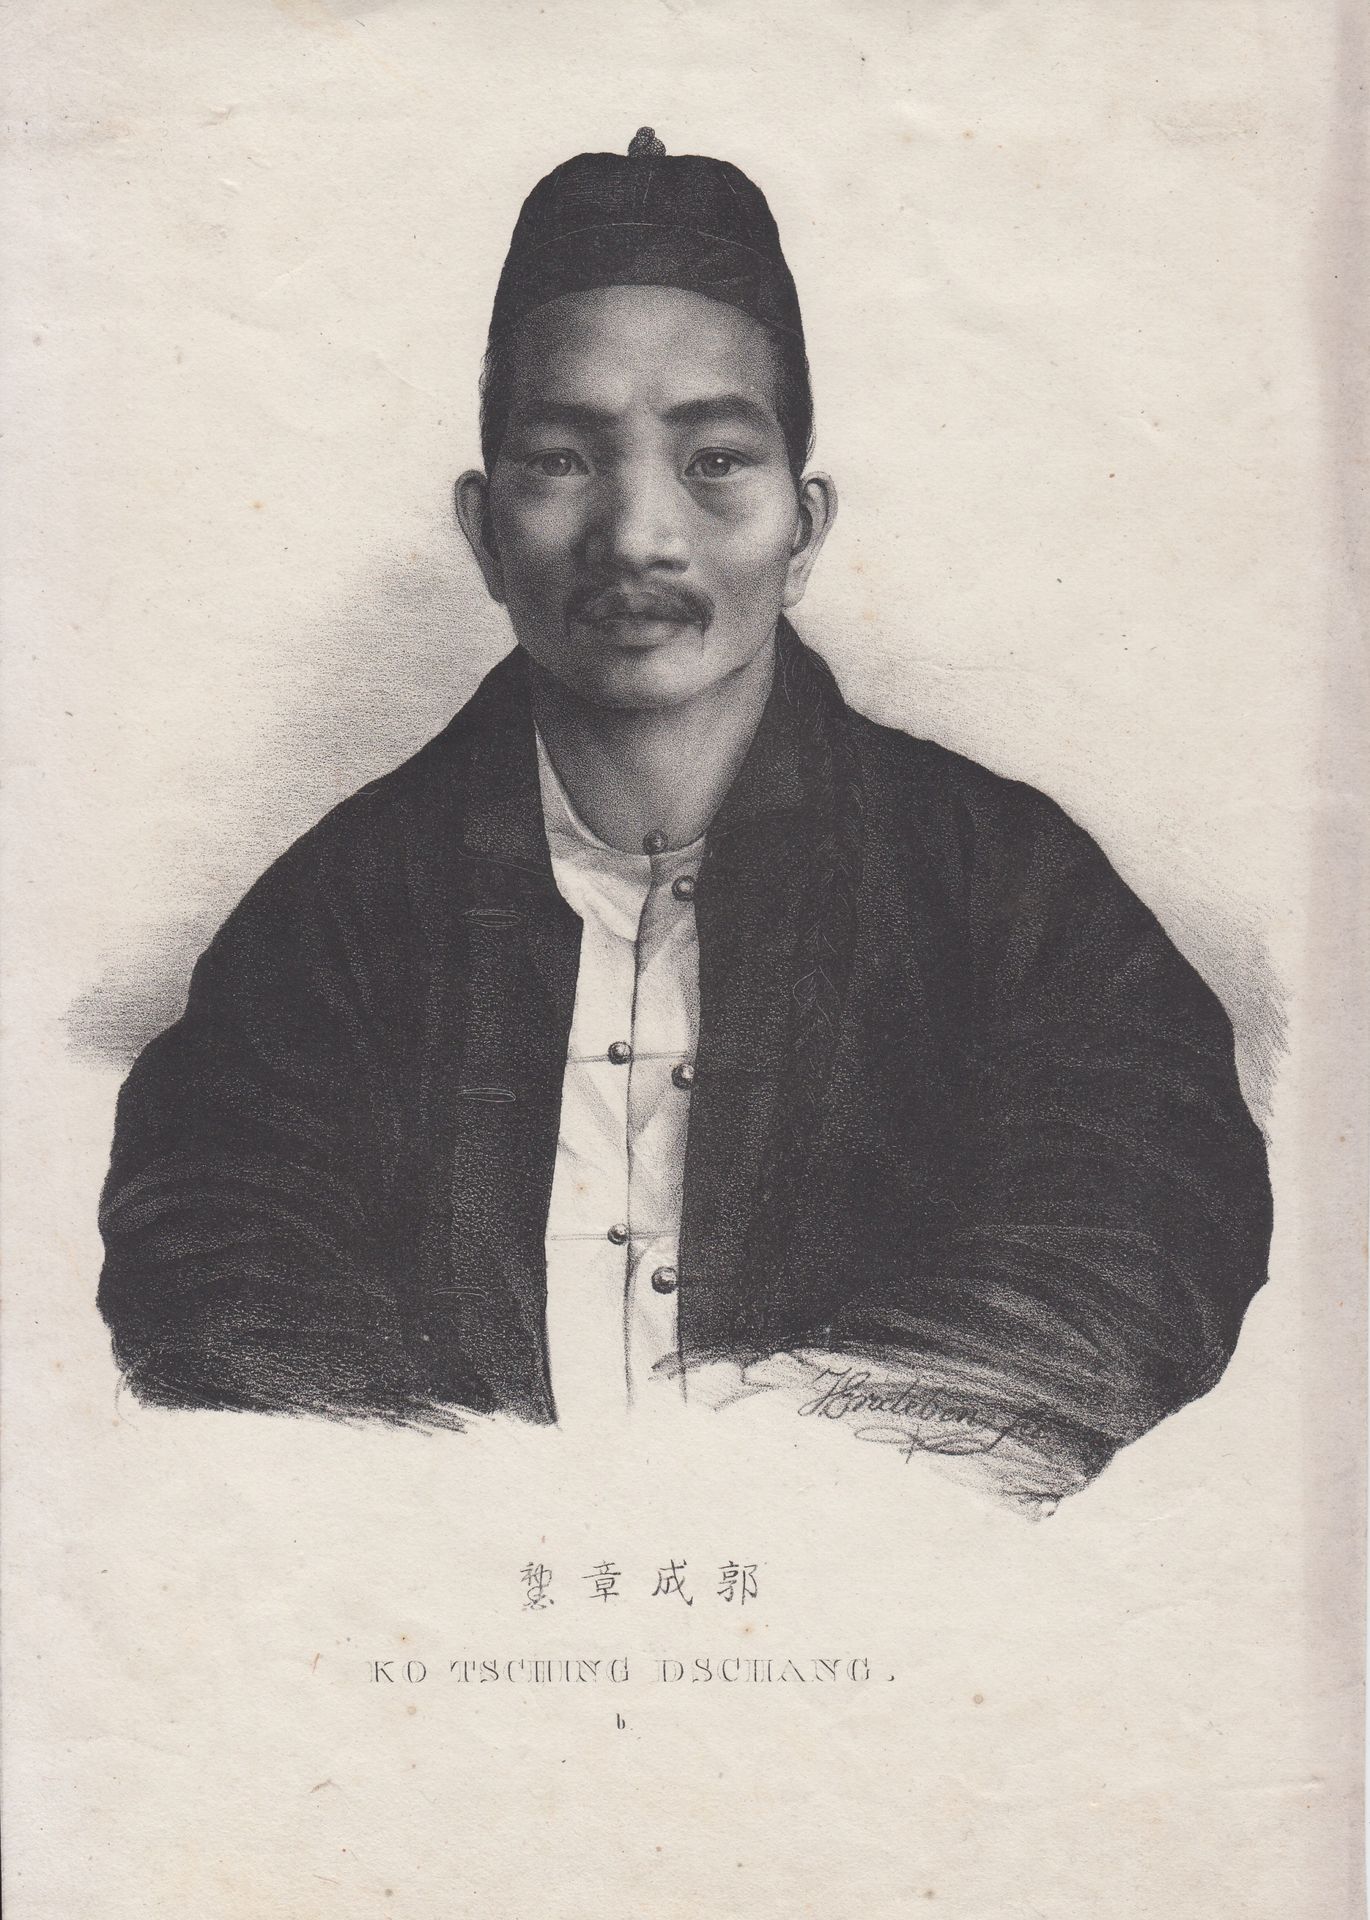 J. ERZLEBEN CHINE, JAPON XIXE

J. Erzleben

Portrait de Ko Tsching Dschang



Gr&hellip;